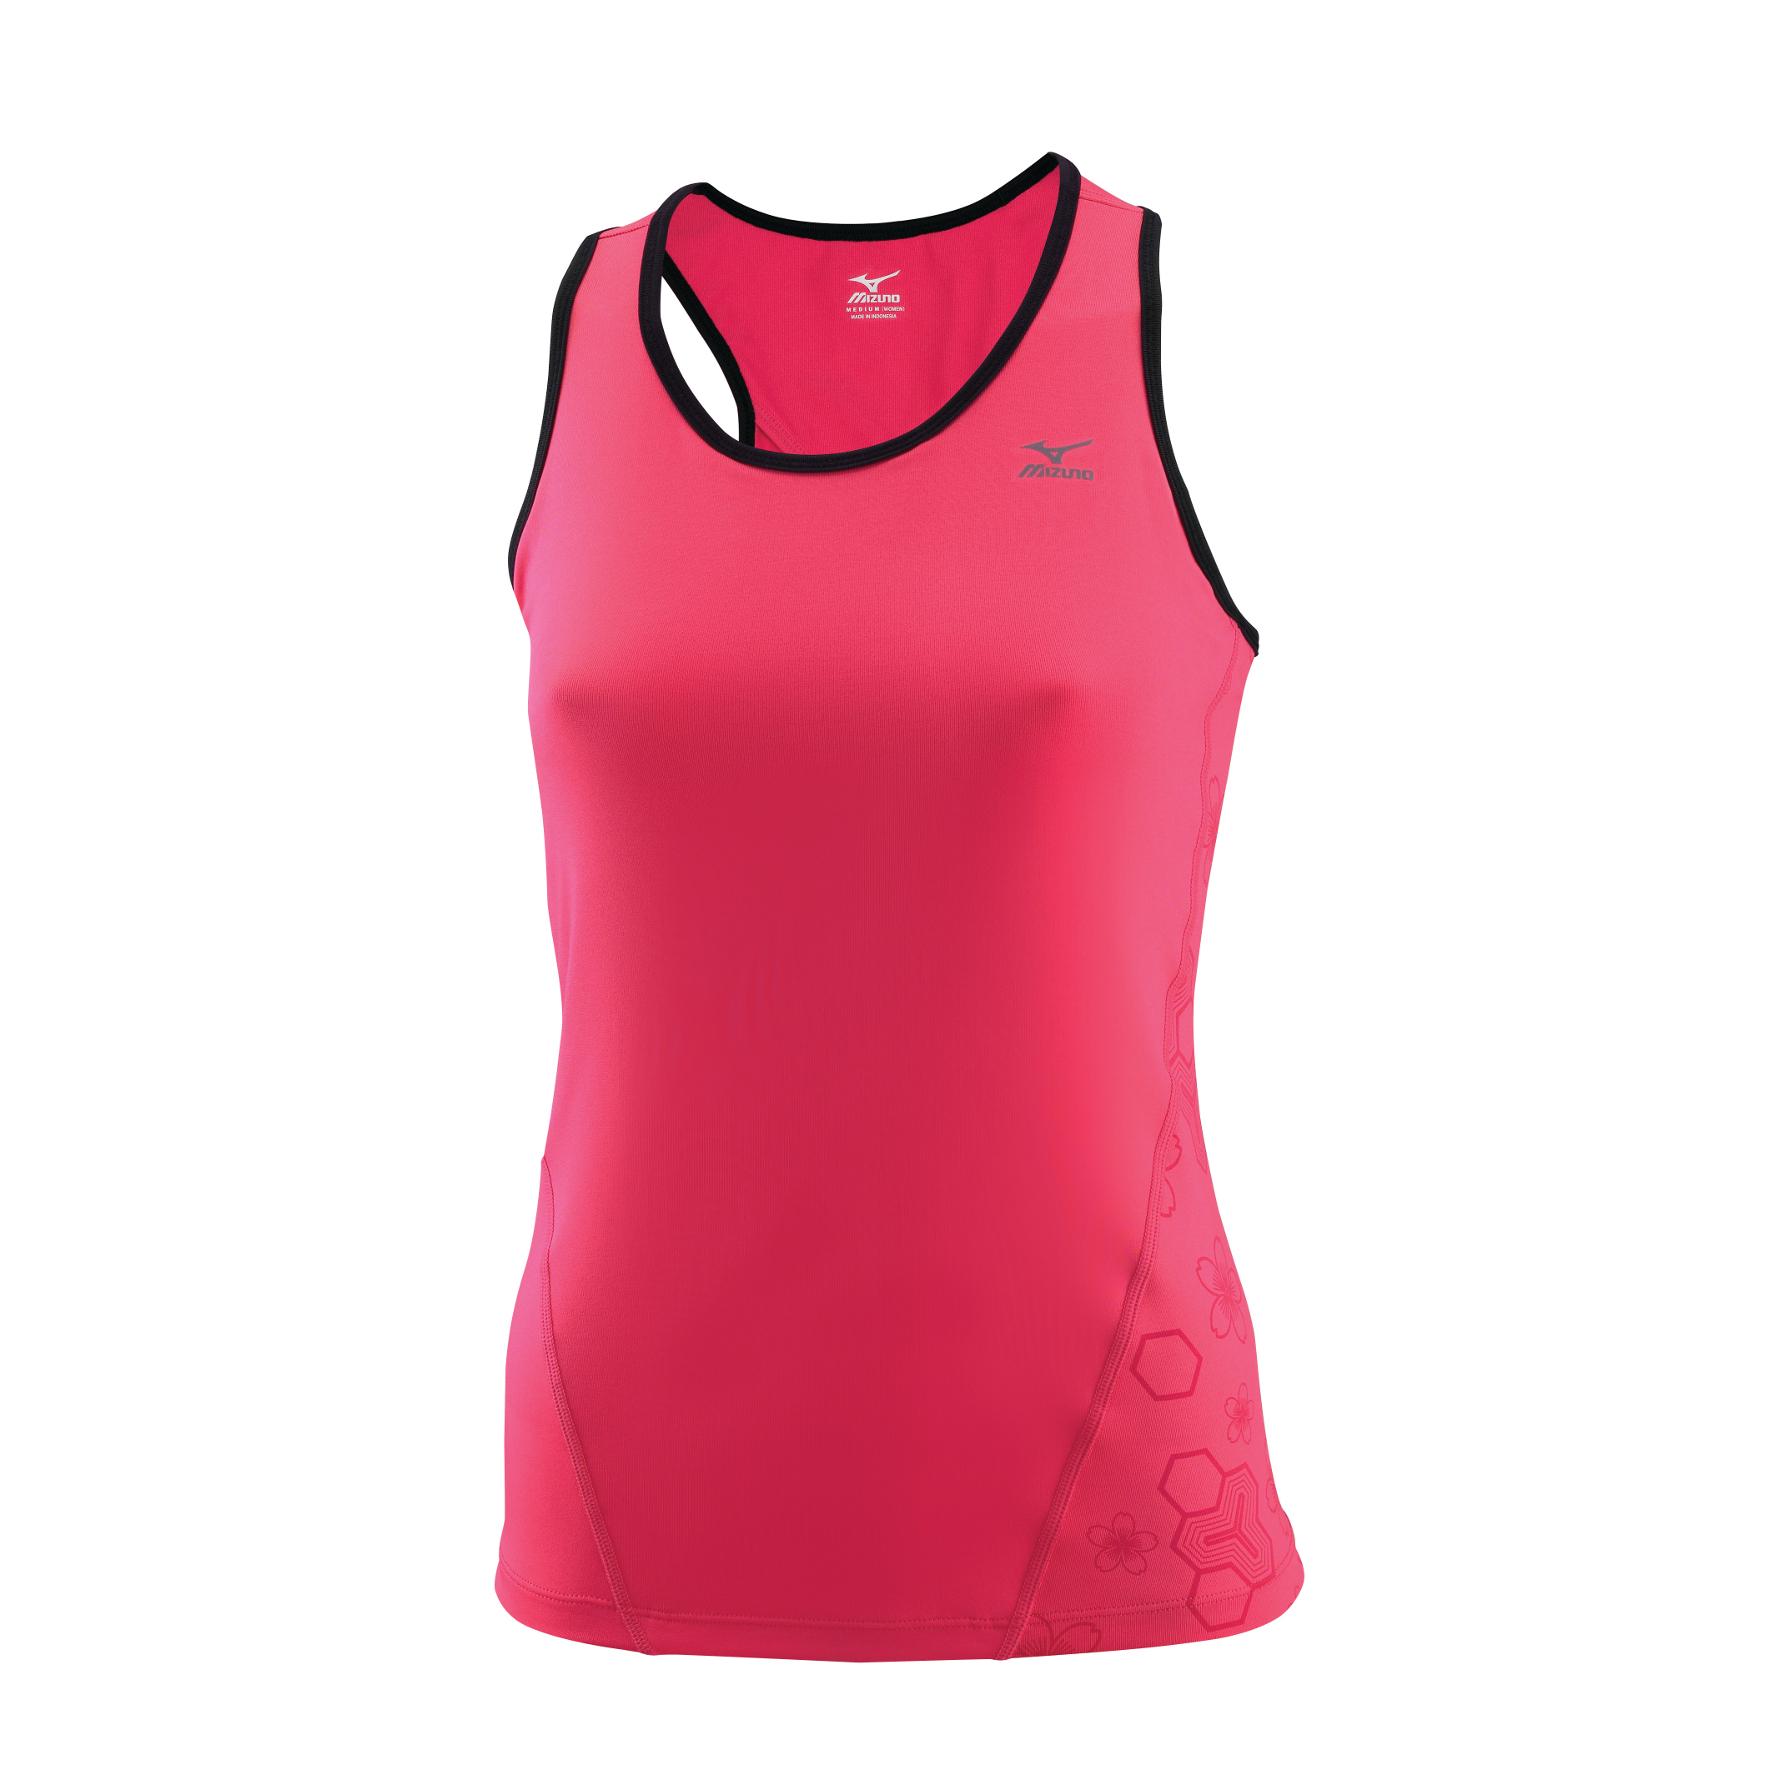 Foto Camiseta para correr Mizuno 77RB321 DryLite rosa/negro para muje, m